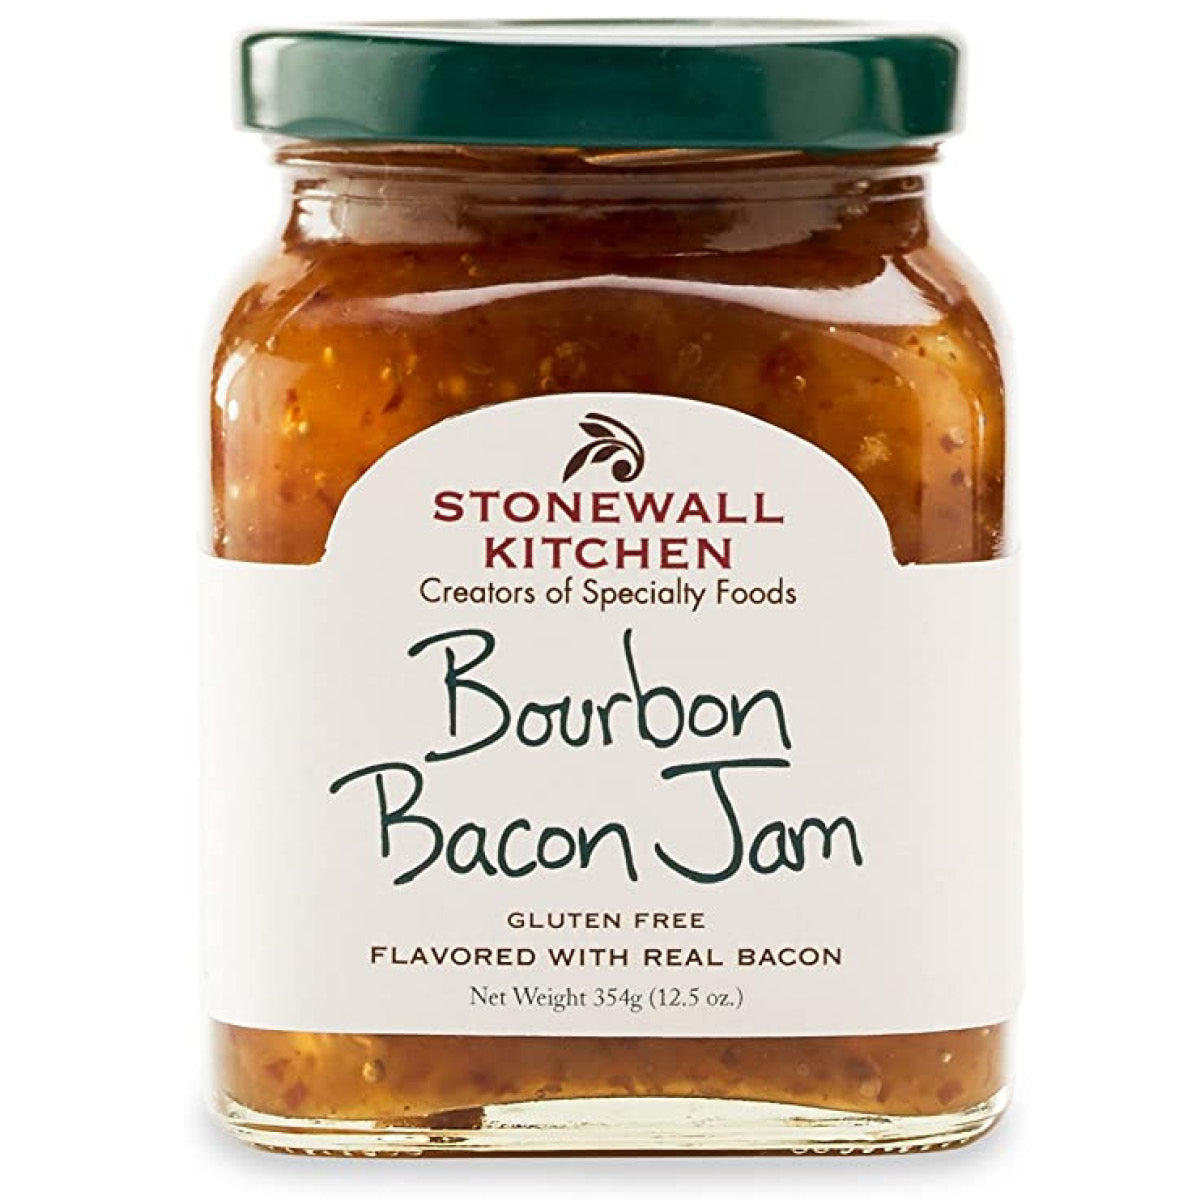 Stonewall Bourbon Bacon Jam, 340g